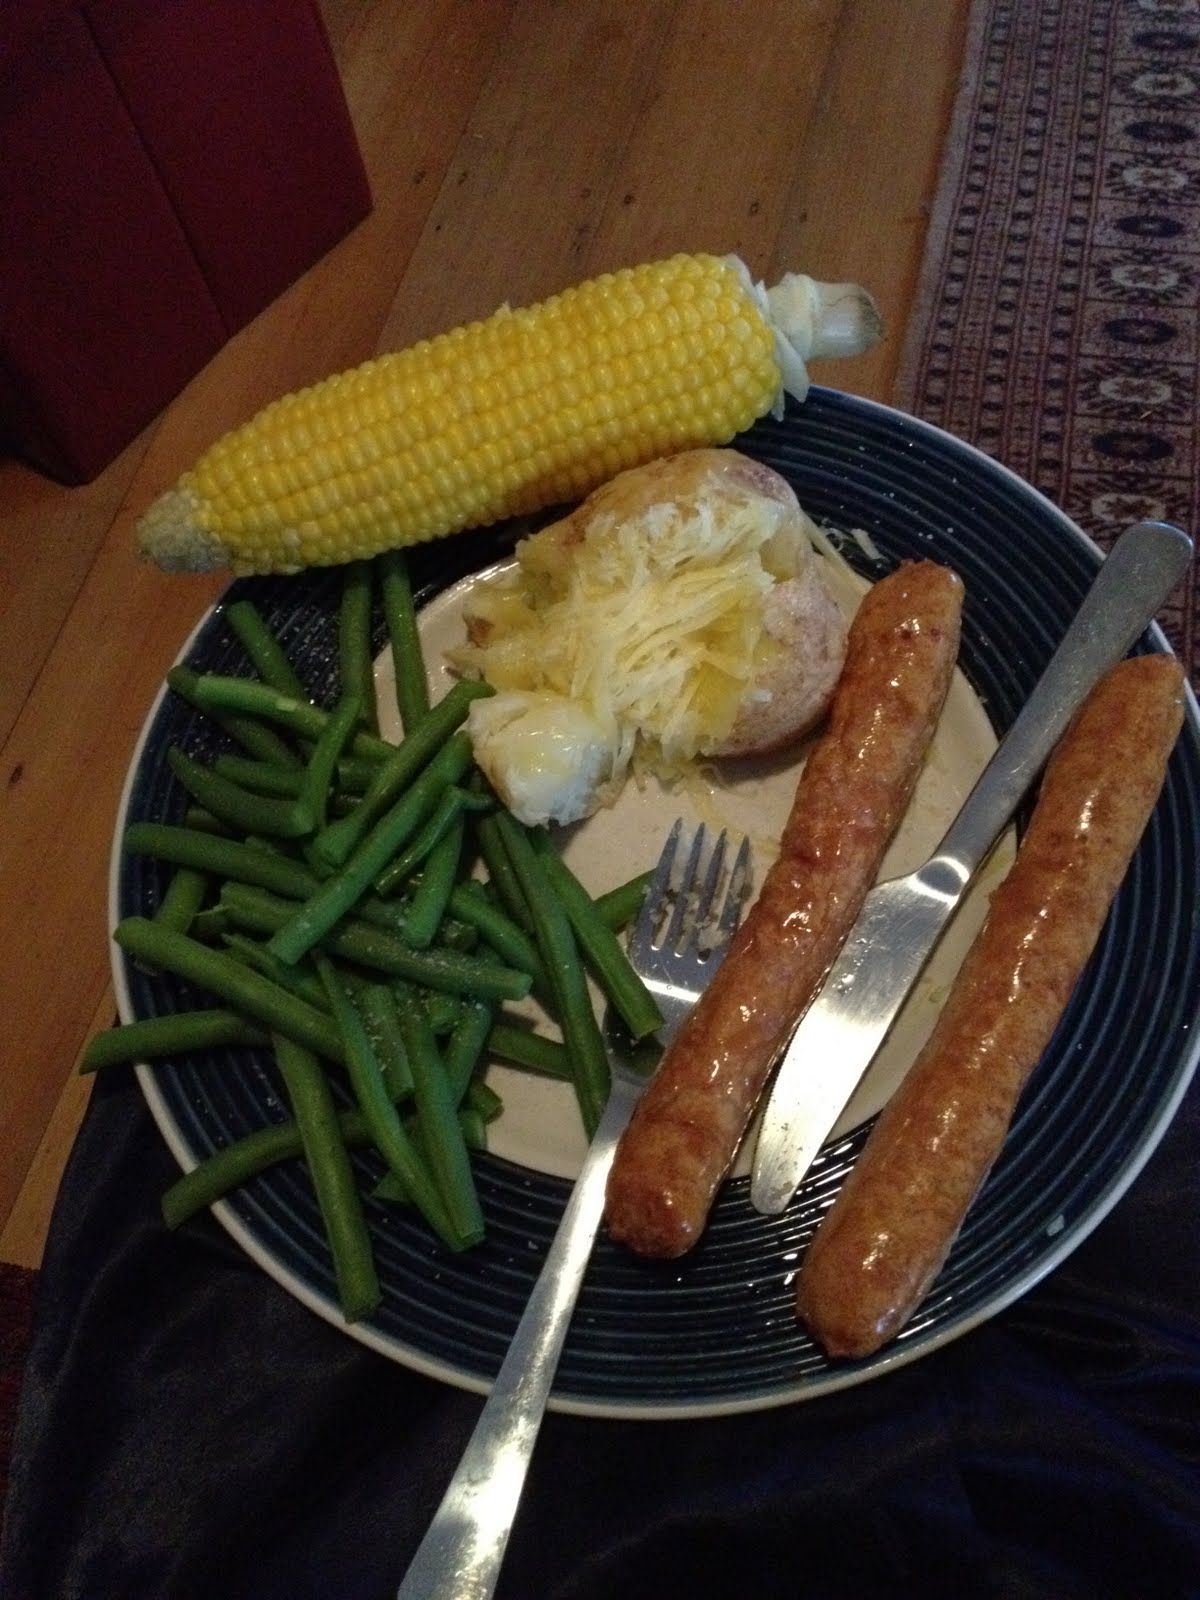 What I Eat: BIG BIG Dinner - Pork sausages, baked potato with grated